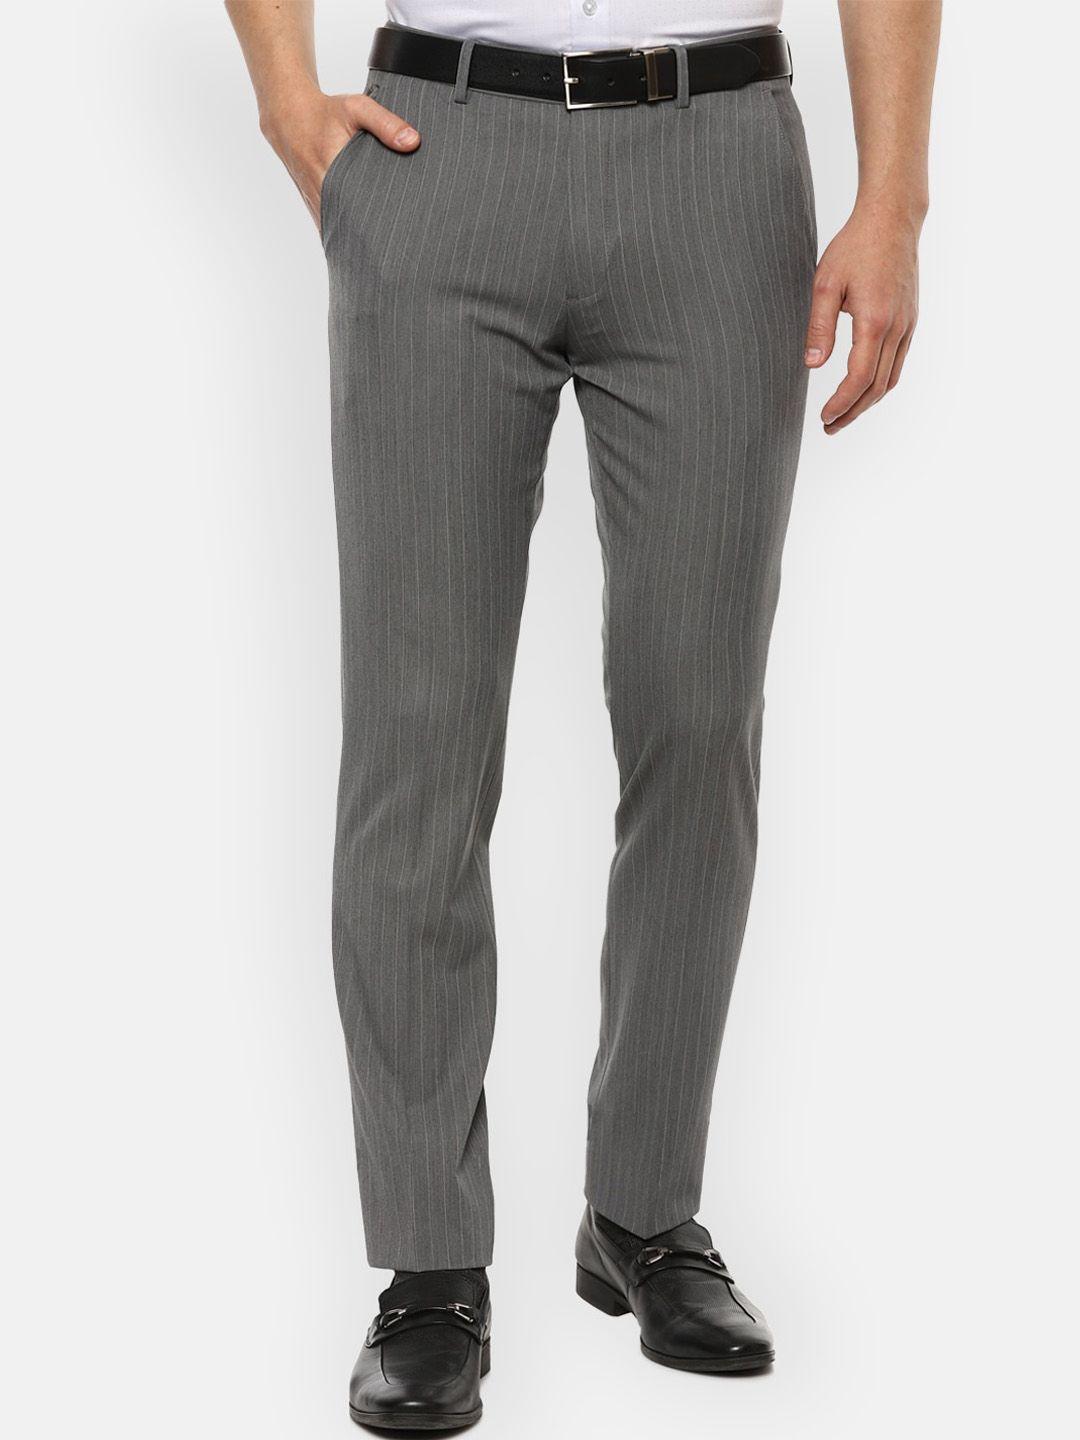 louis philippe permapress men grey striped slim fit formal trousers